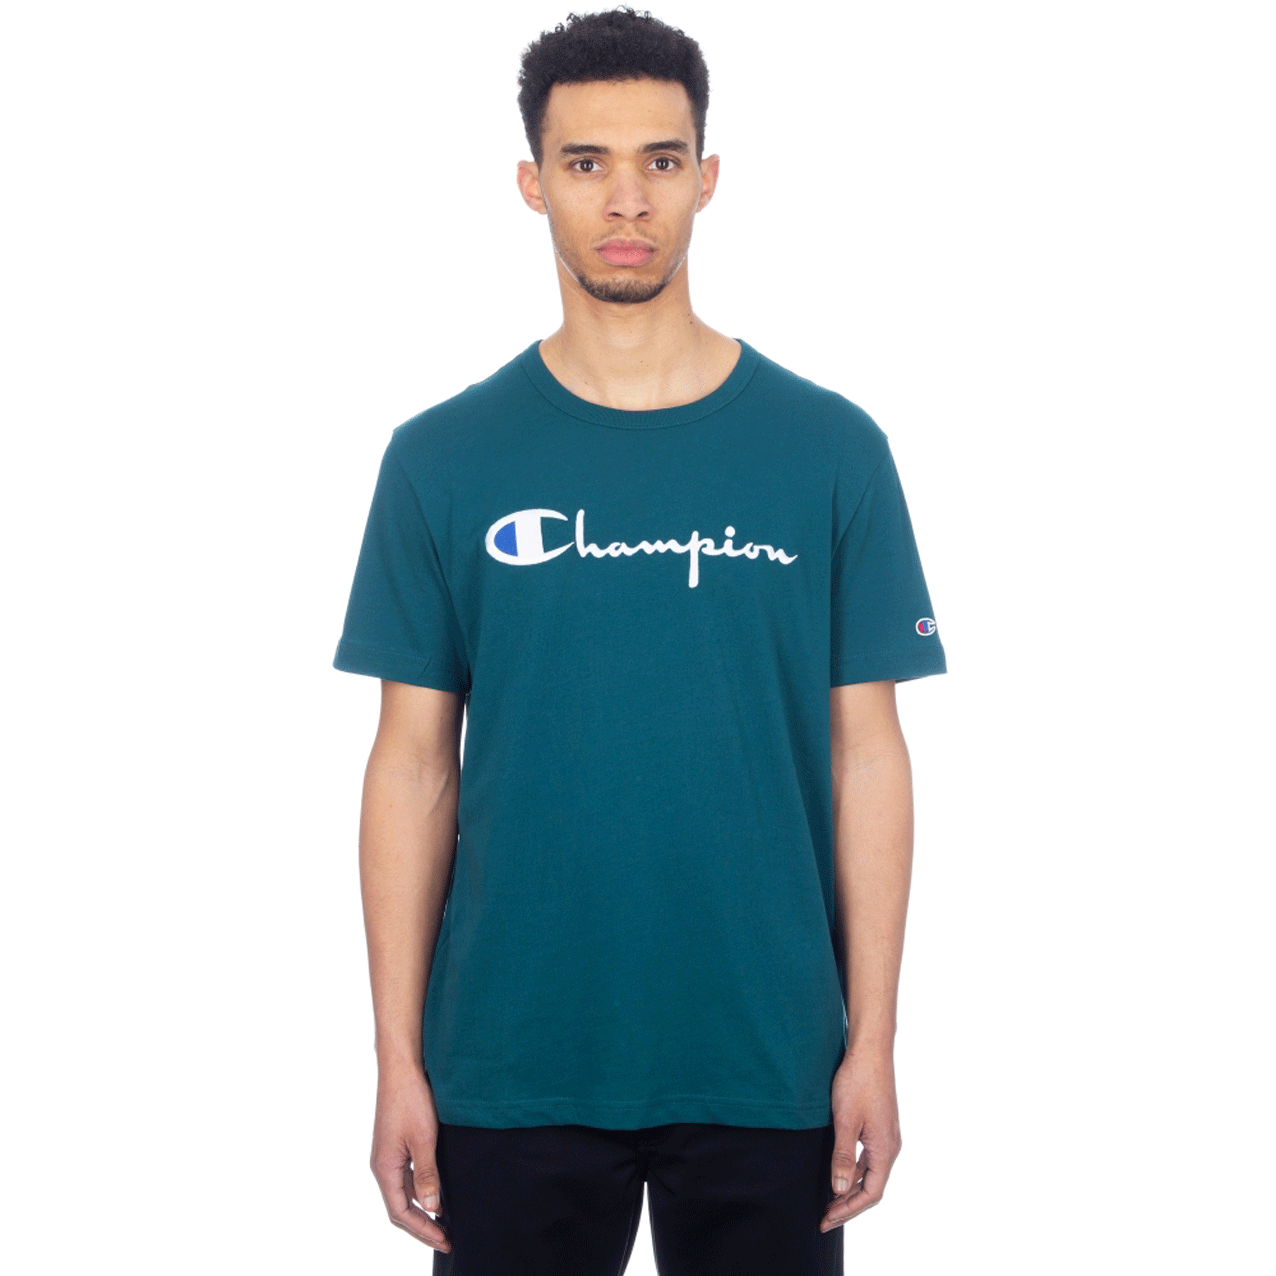 Champion  t-shirt  Europe crewneck small logo   210972-F19-GS549 freeshipping - Benson66